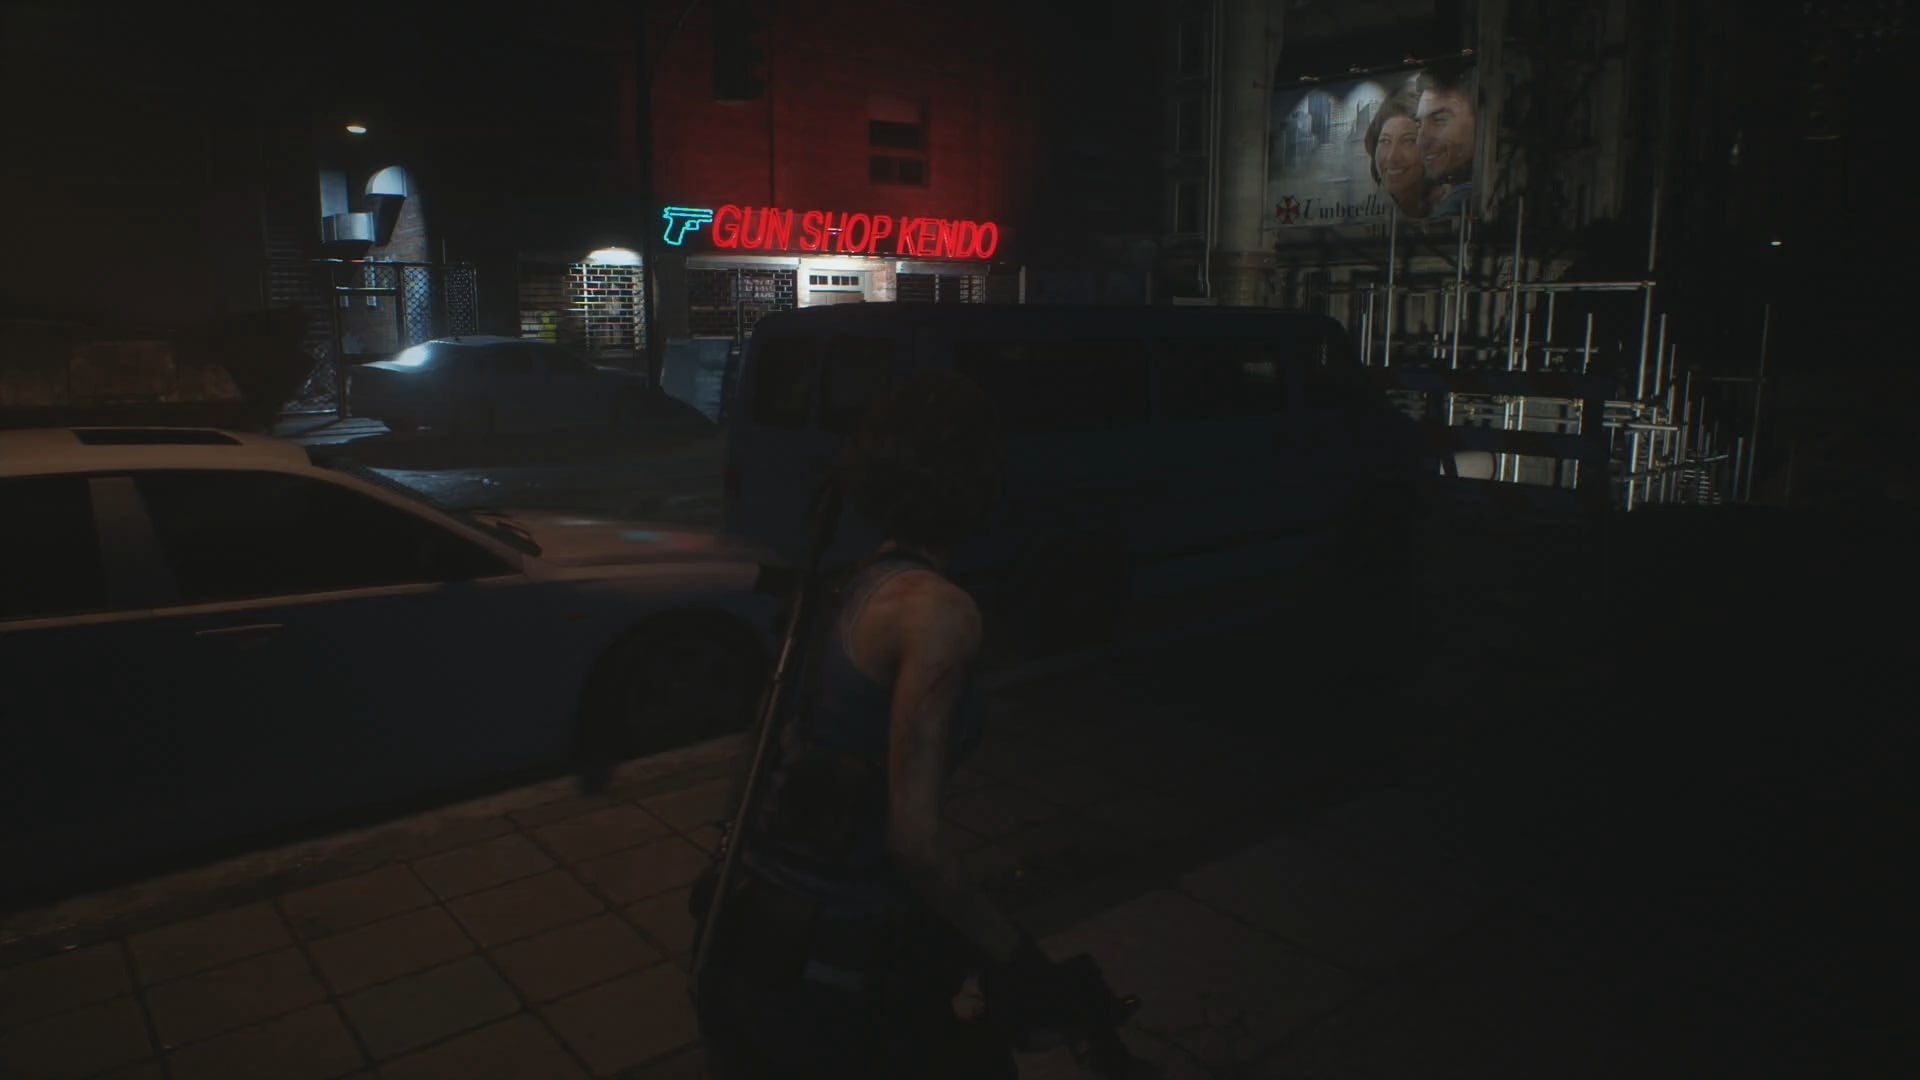 Resident evil 3 remake gun shop kendo